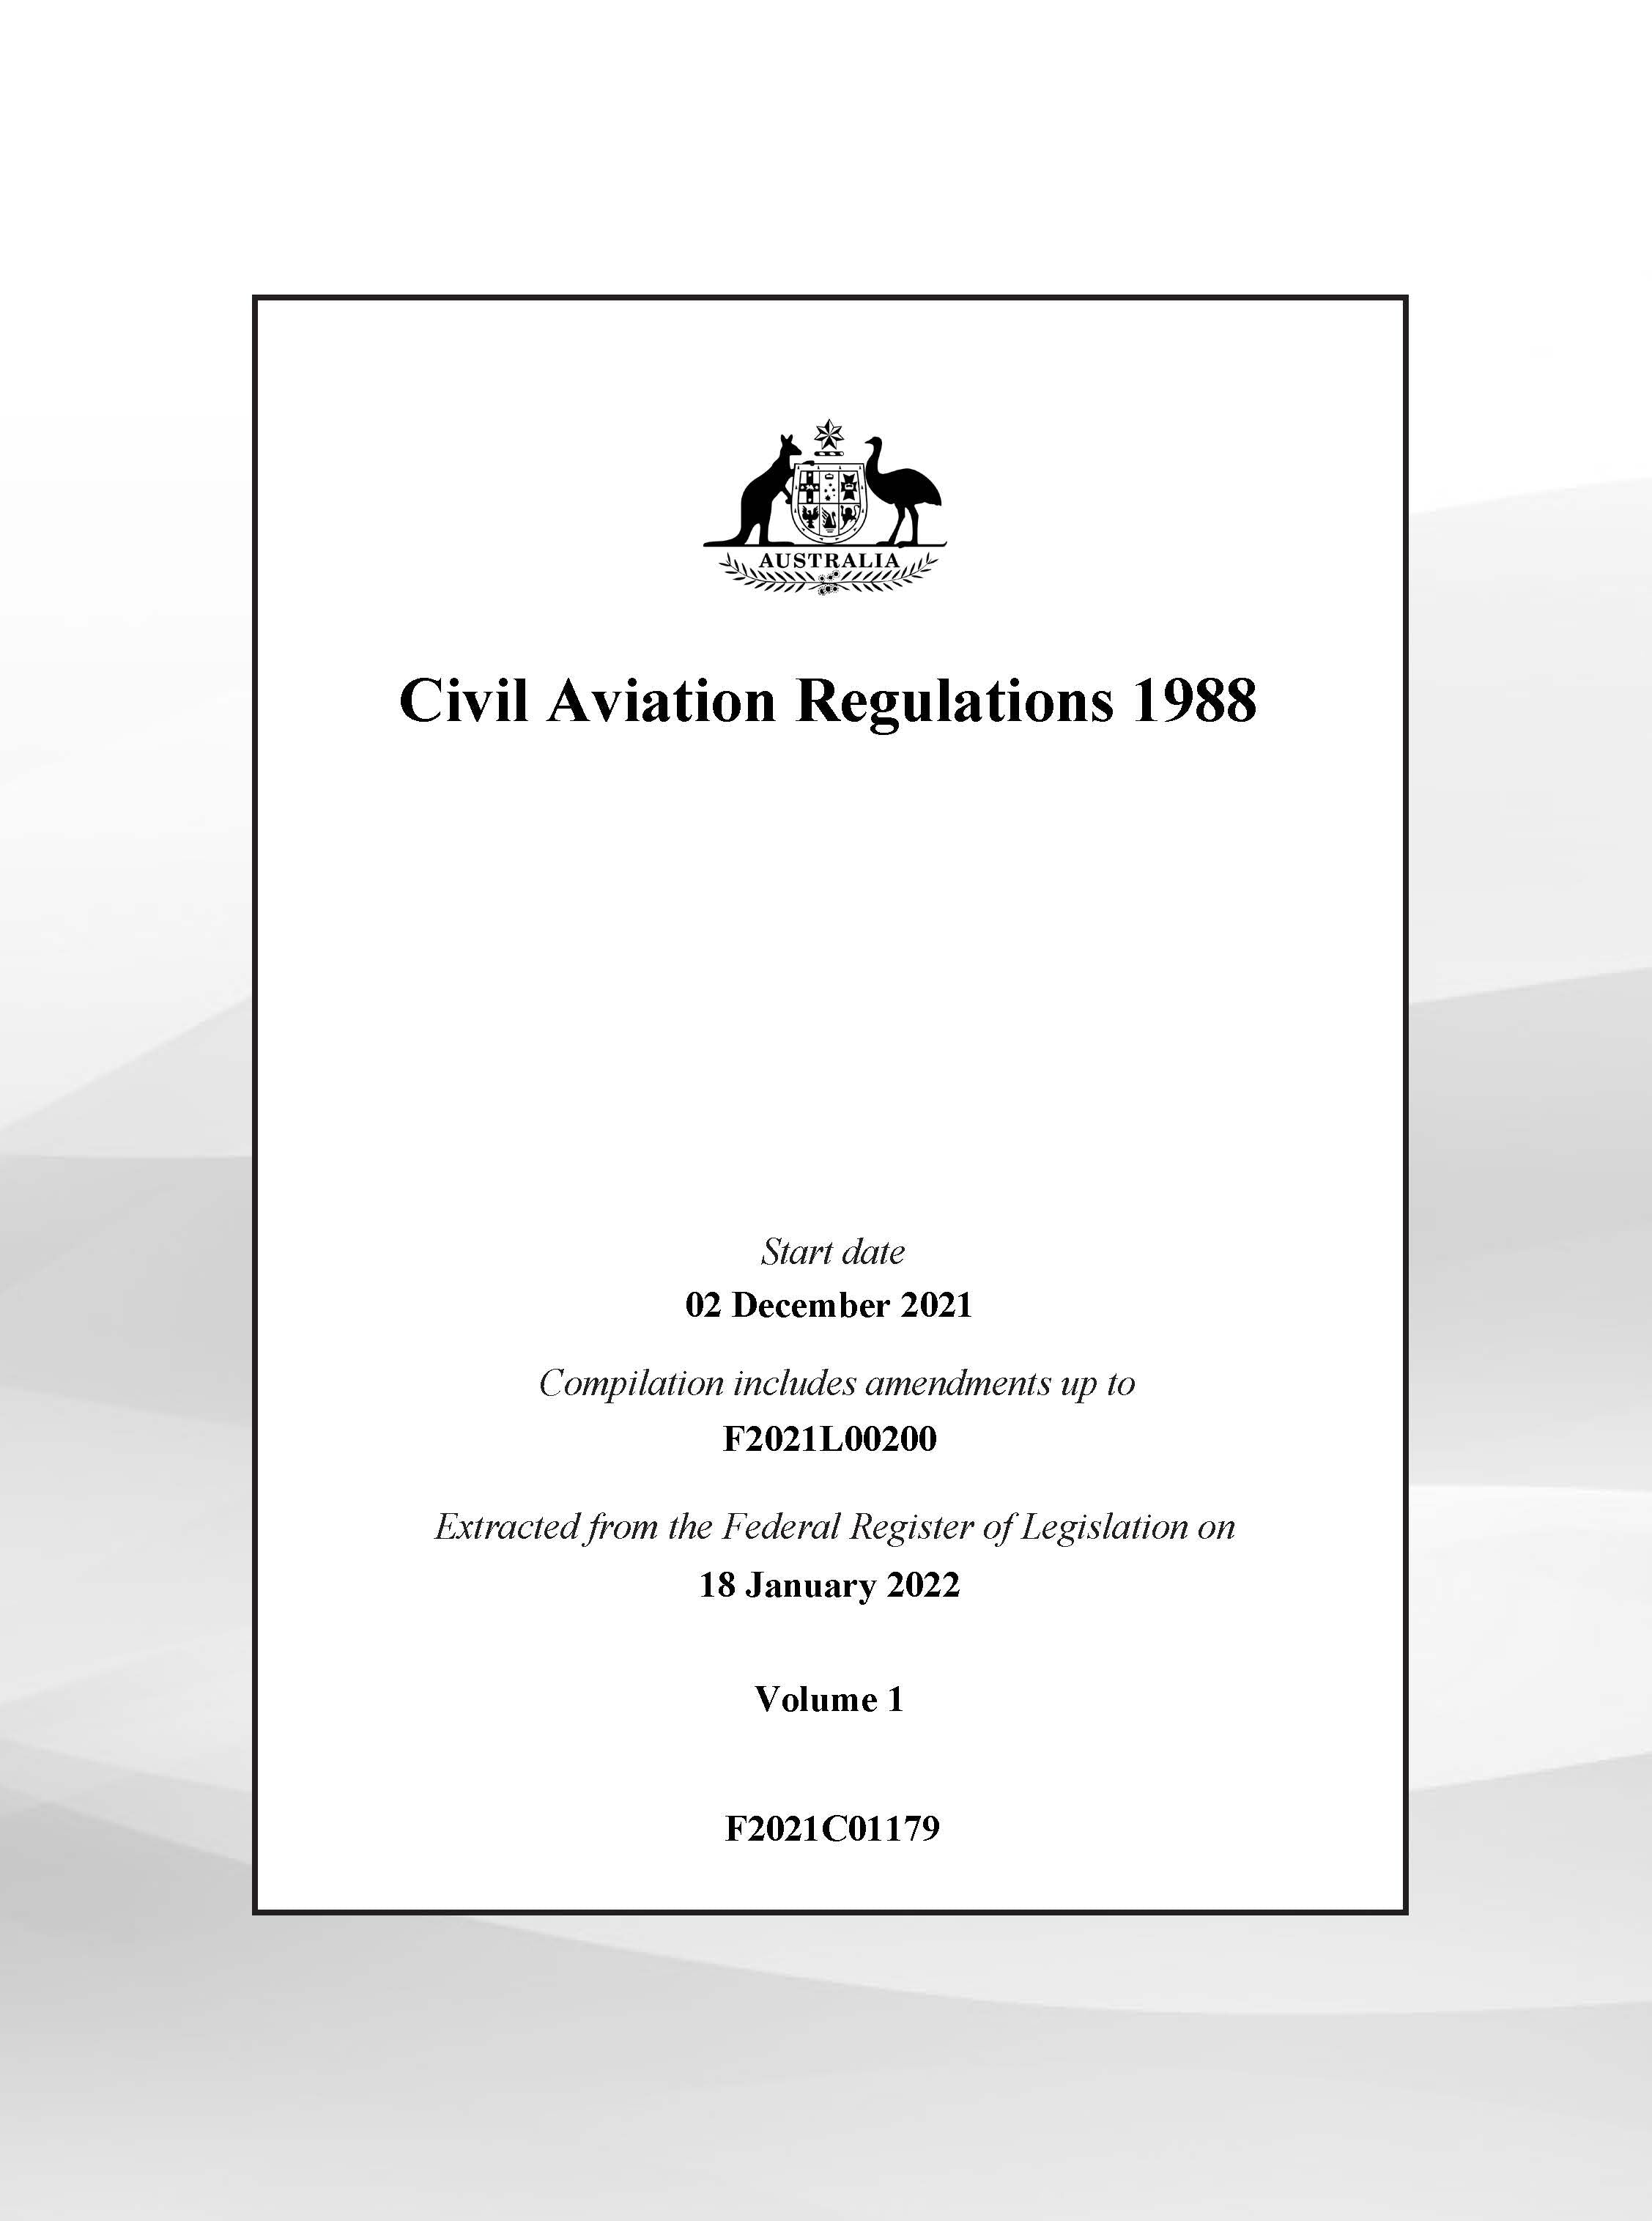 CASA CAR 1988 Civil Aviation Regulations 1988 (Volume 1 and 2)